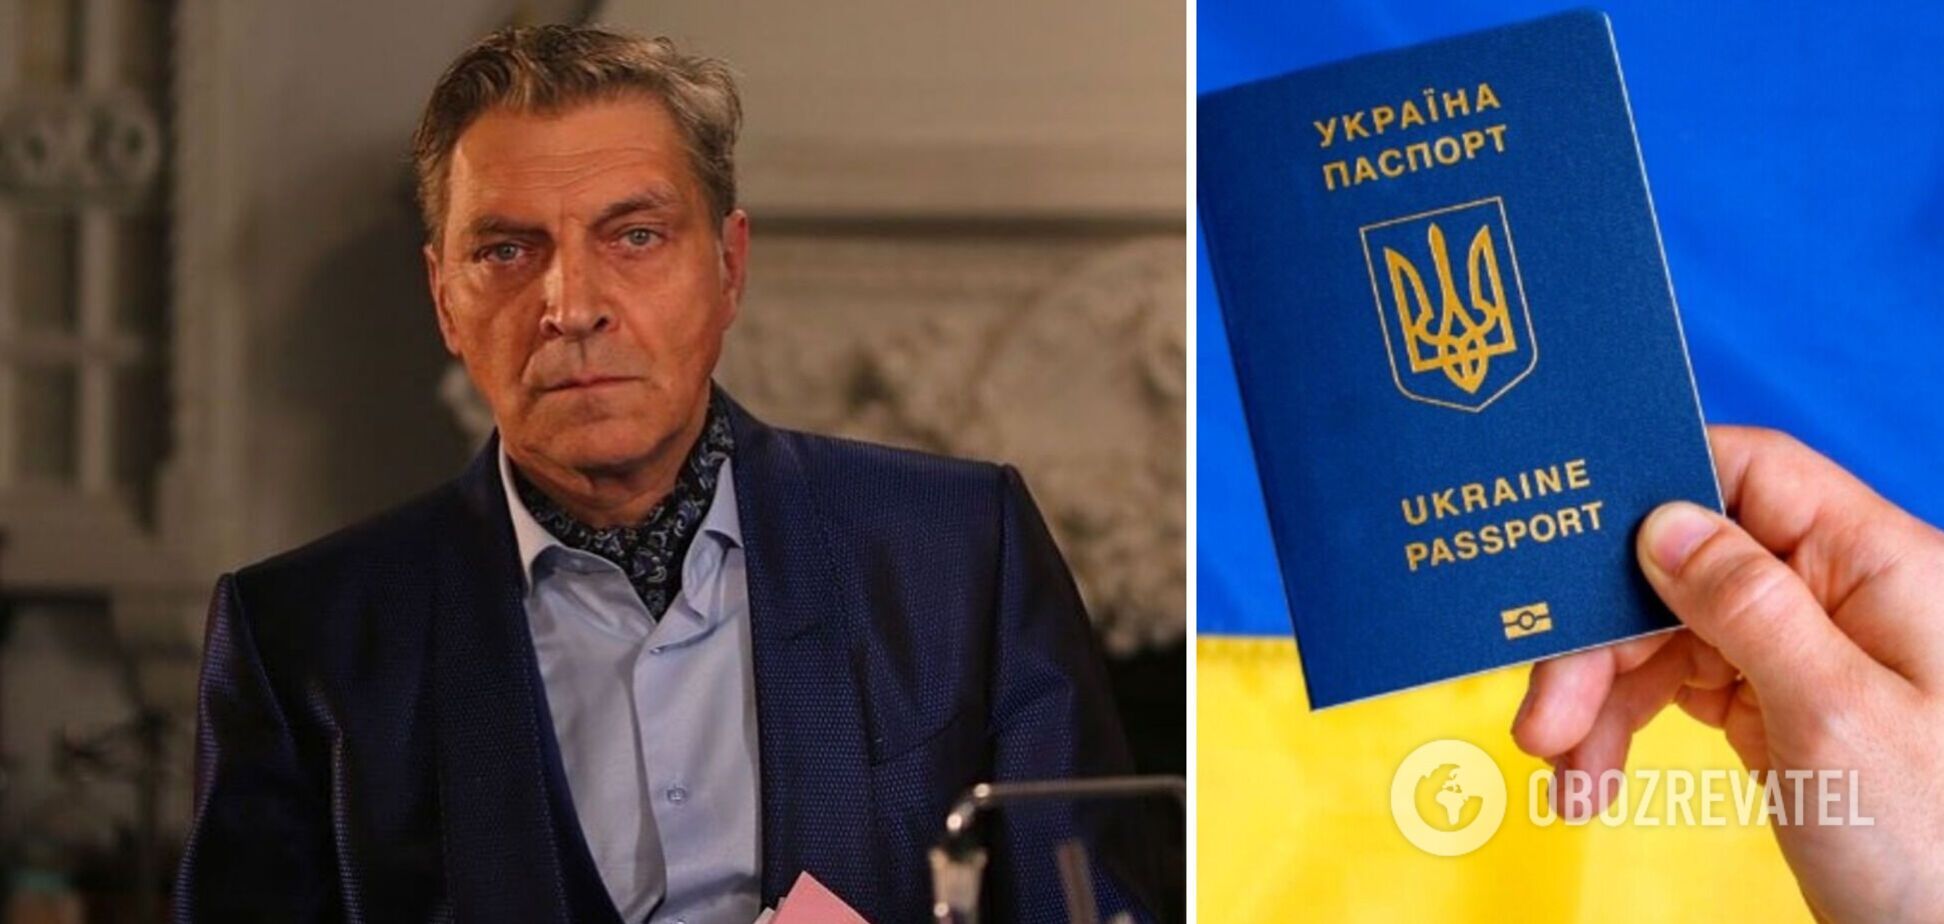 Невзоров показав паспорт України. Відео